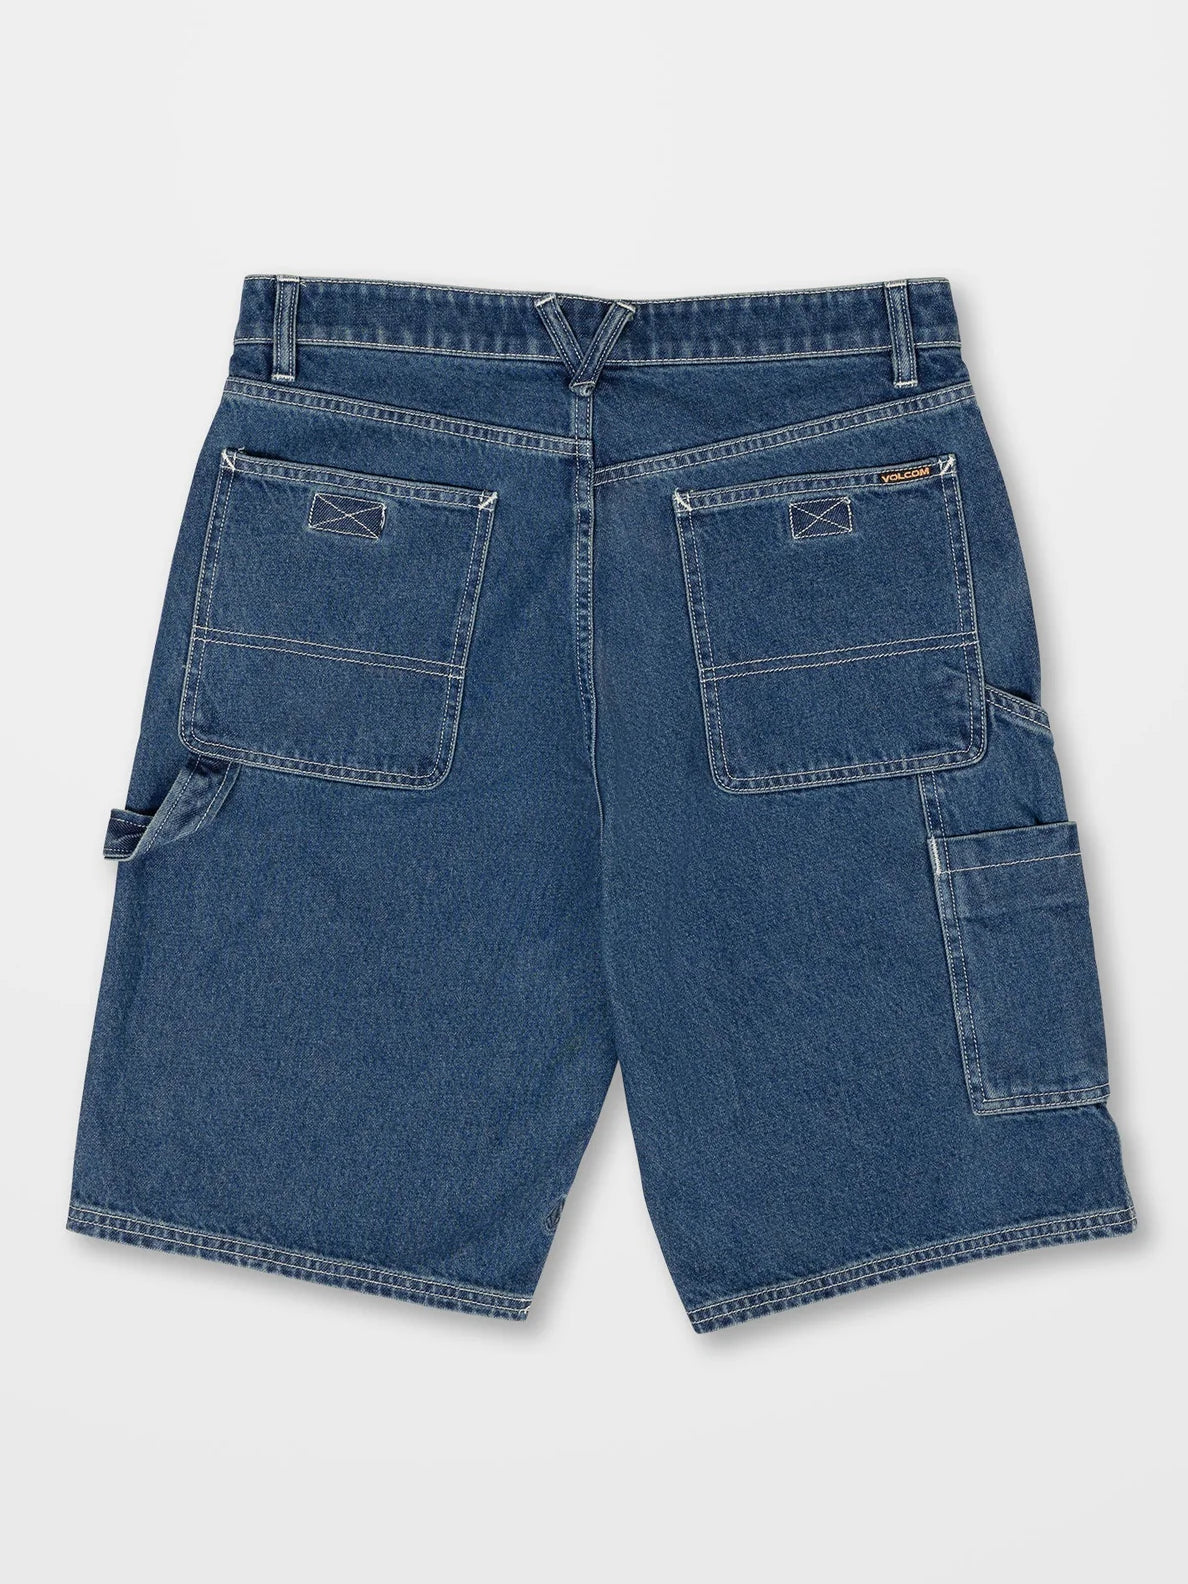 Pantalón Corto Volcom Labored Denim Utility -  Indigo Ridge Wash | Pantalones cortos de Hombre | Todos los pantalones de hombre | Volcom Shop | surfdevils.com